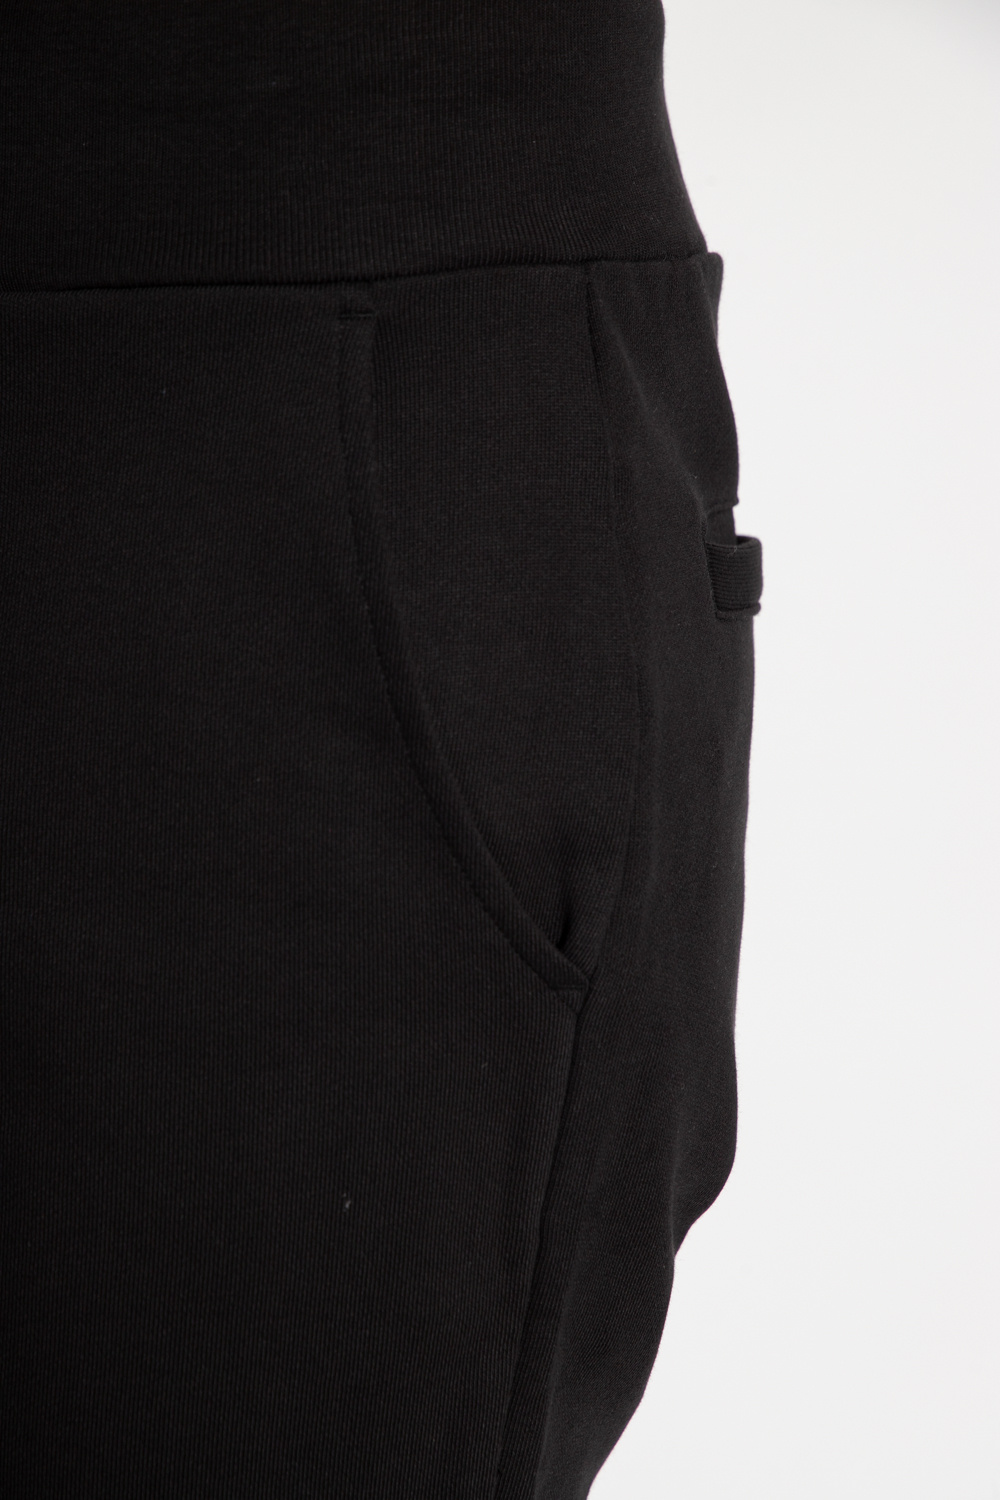 GenesinlifeShops Sweden - Nike Training Pro 365 leggings in black